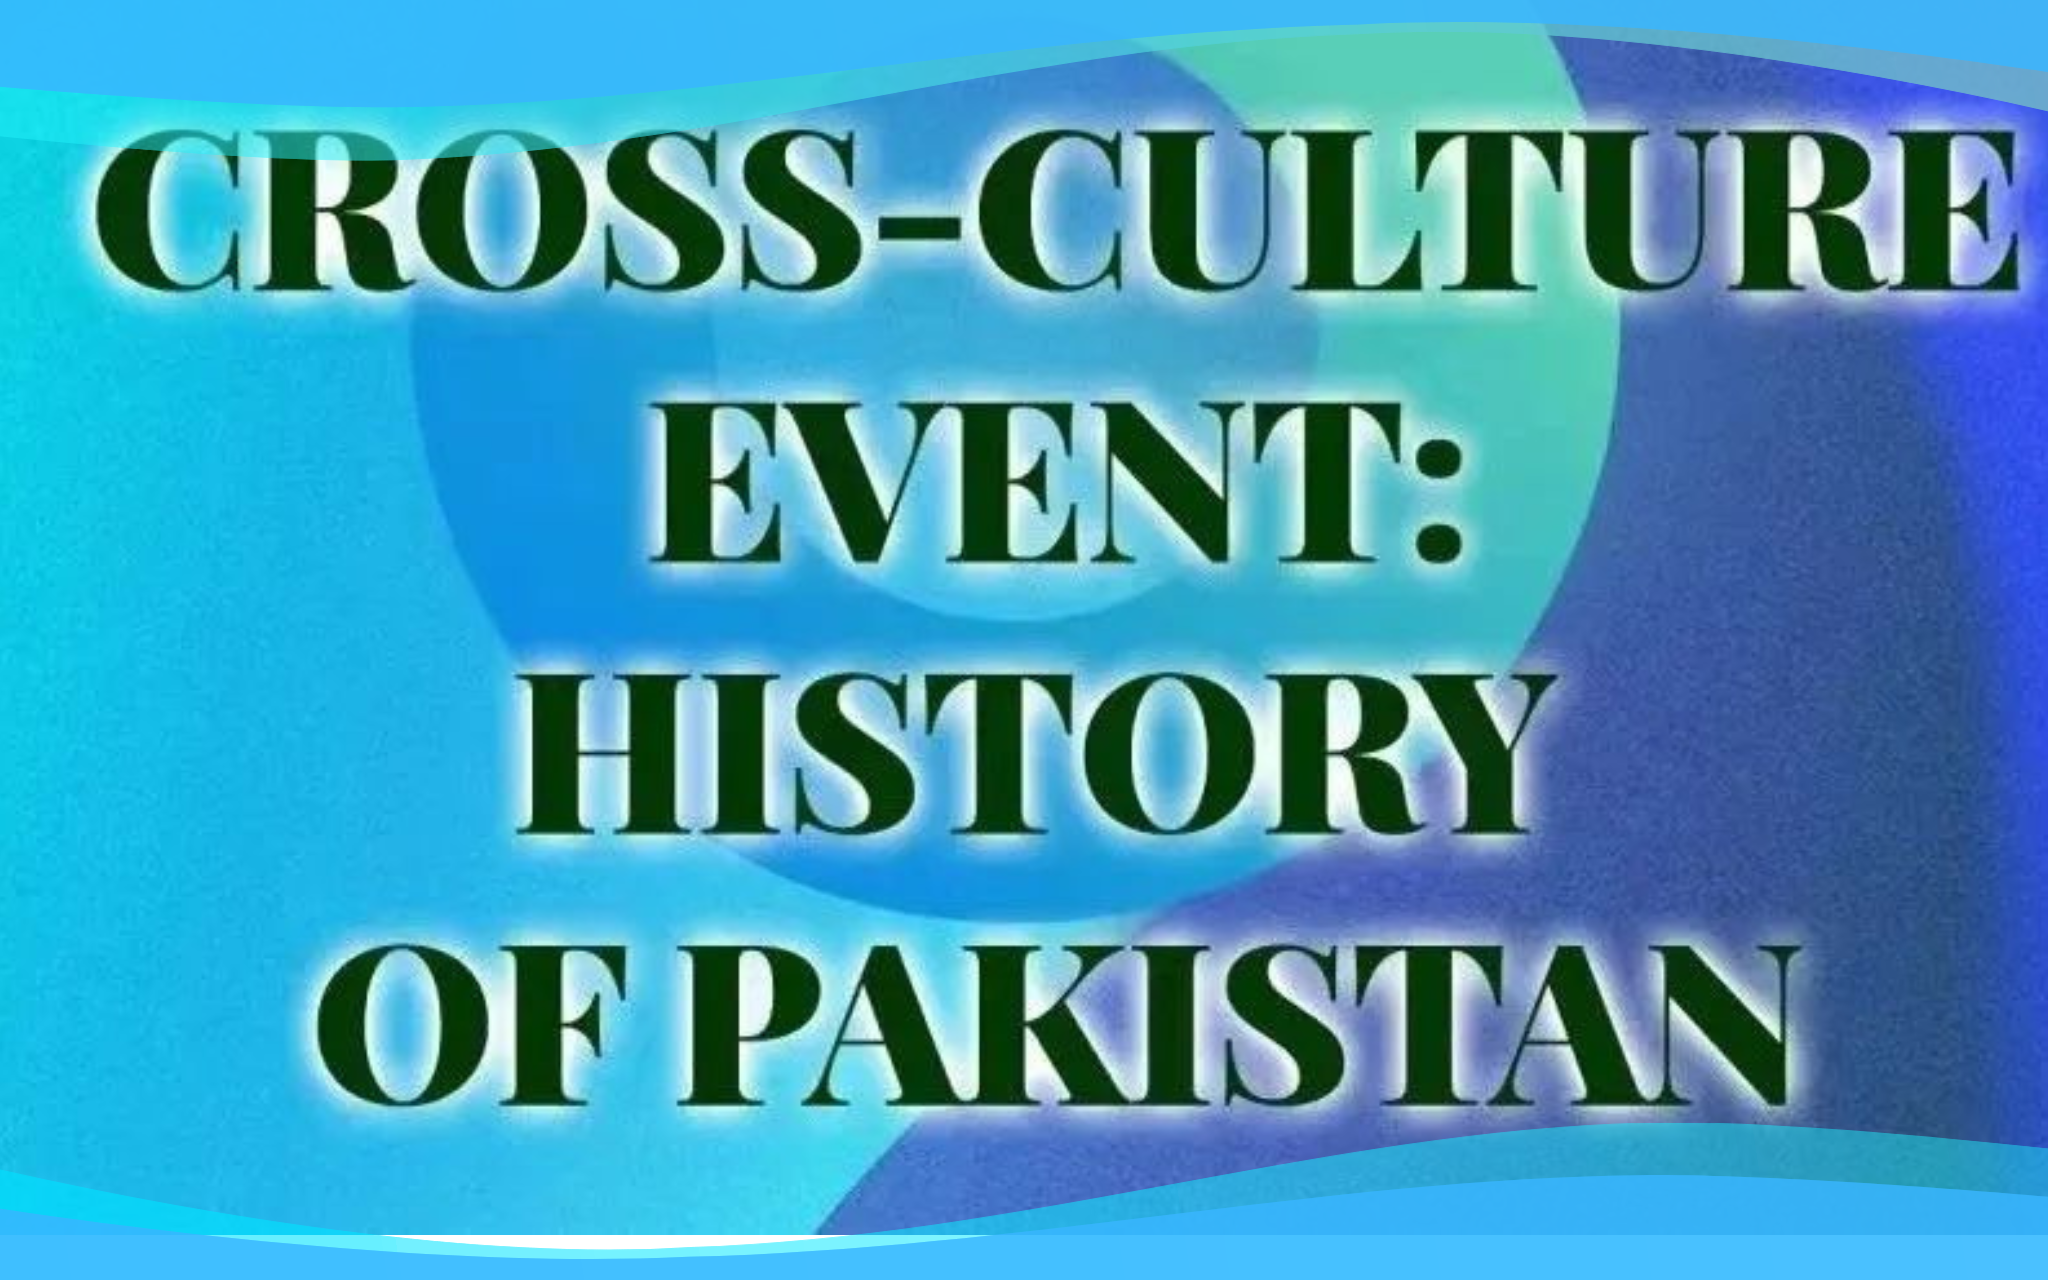 Cross-Culture Event “History of Pakistan”